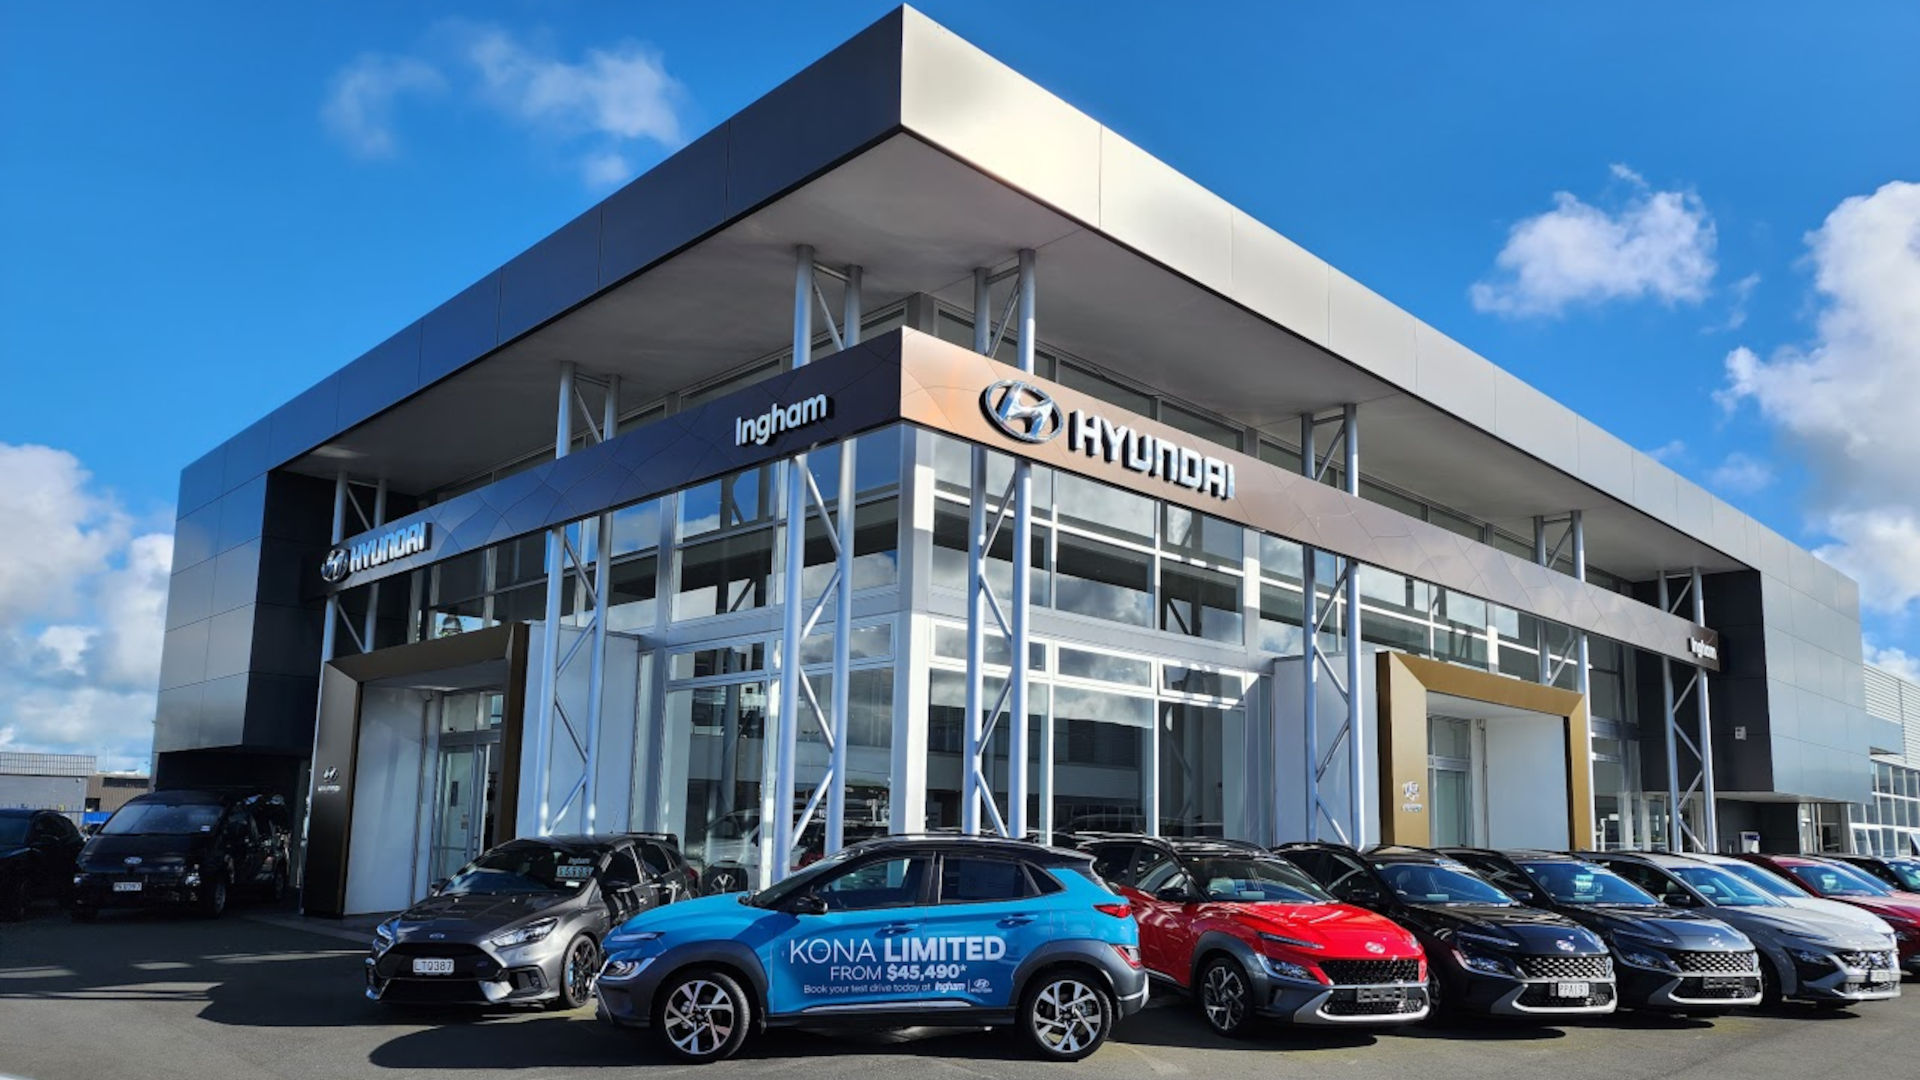 Ingham Hyundai car dealership in Hamilton New Zealand